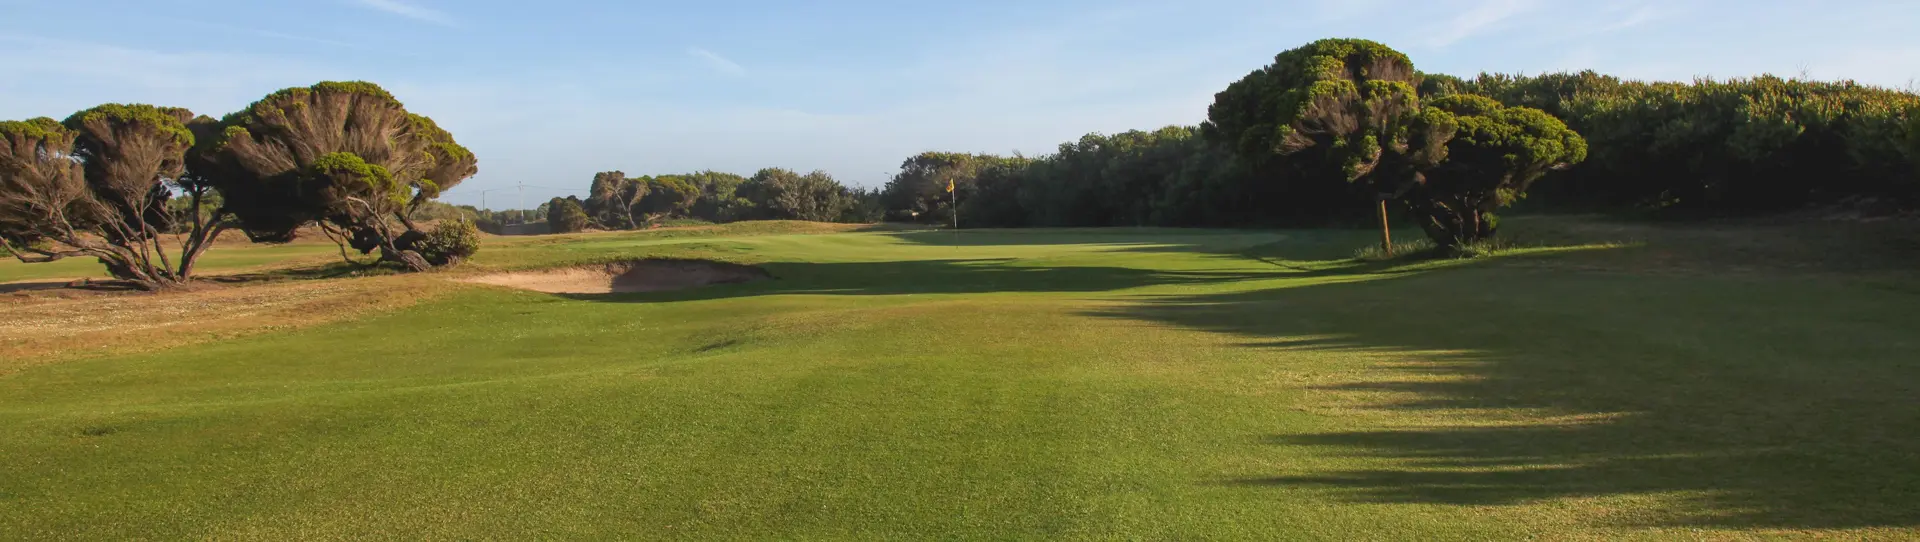 Portugal golf courses - Oporto Golf Club - Photo 2